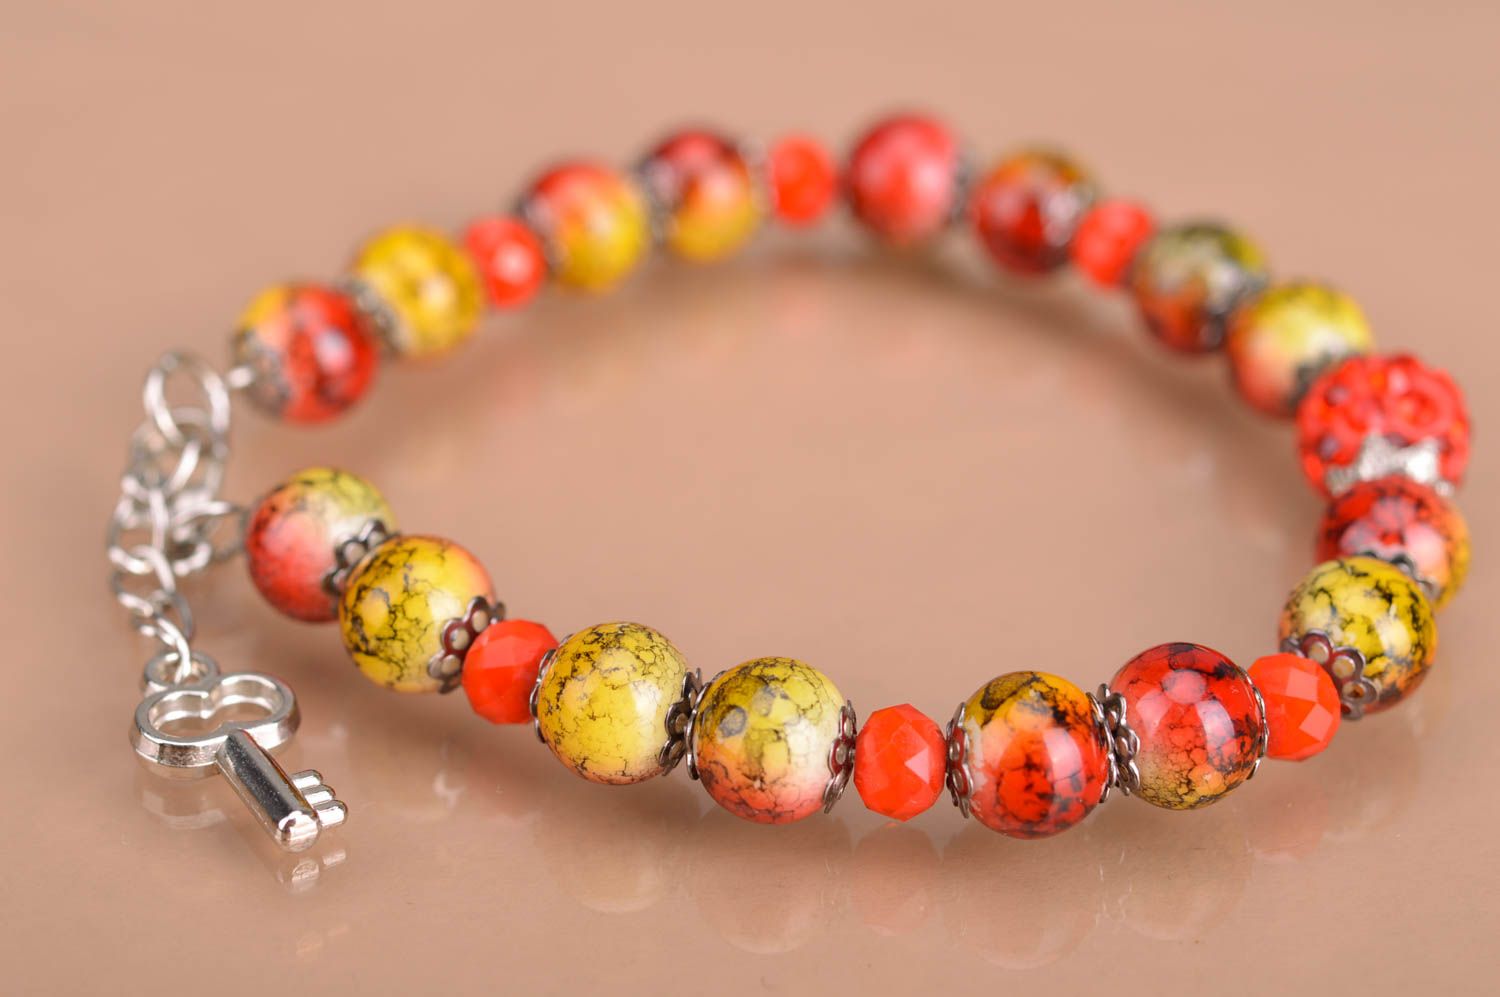 Handmade colorful glass bead wrist bracelet with metal charm key for women photo 5